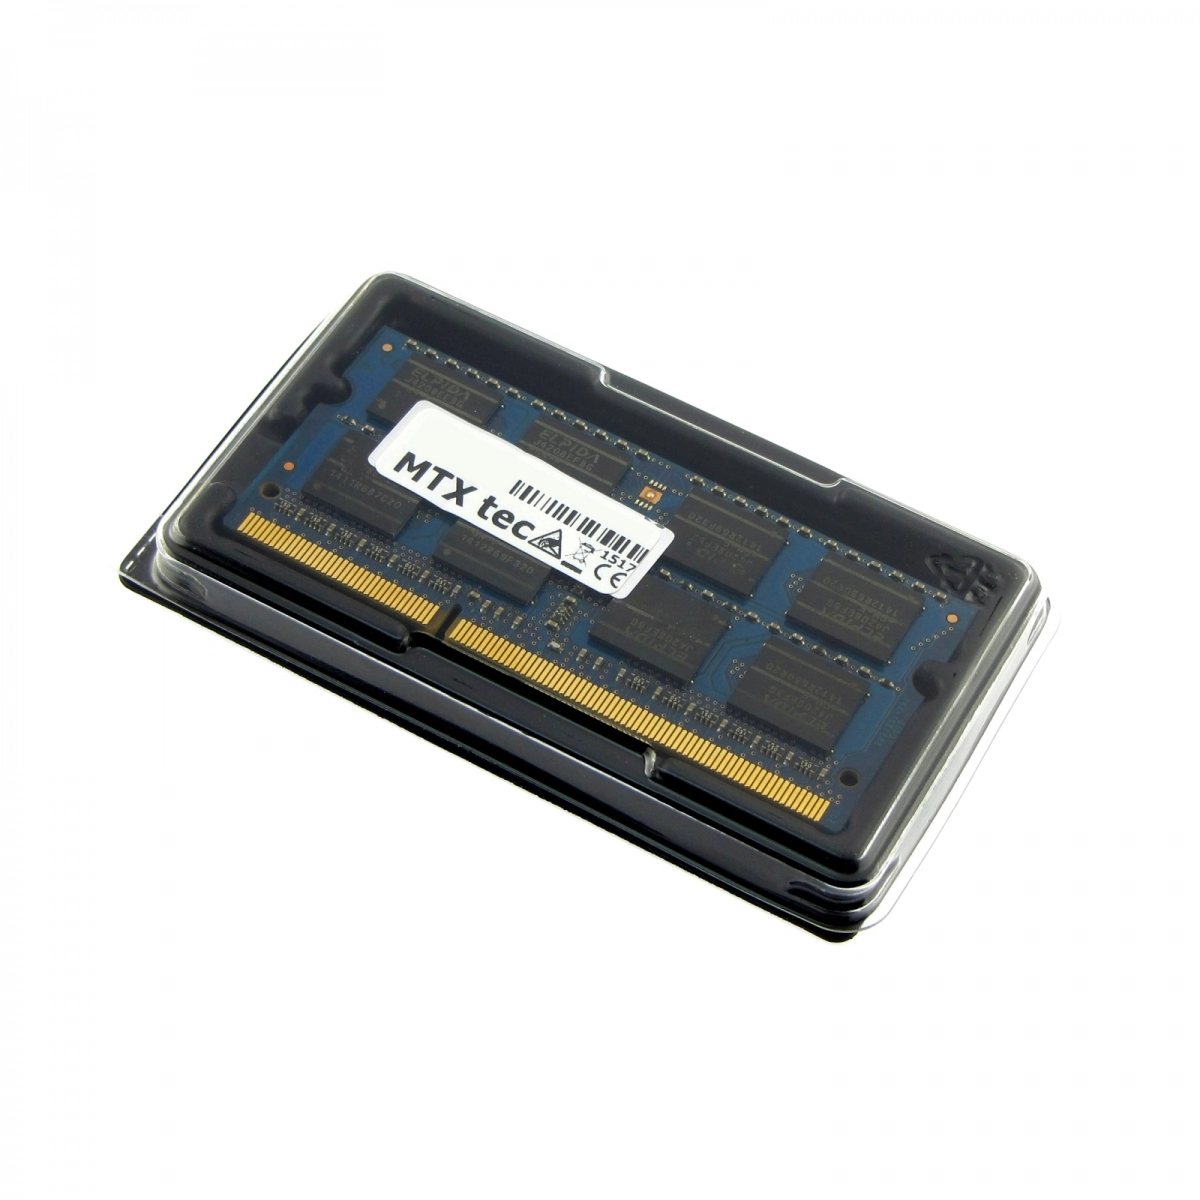 MTXtec Arbeitsspeicher 8 GB RAM für LENOVO ThinkPad X131e